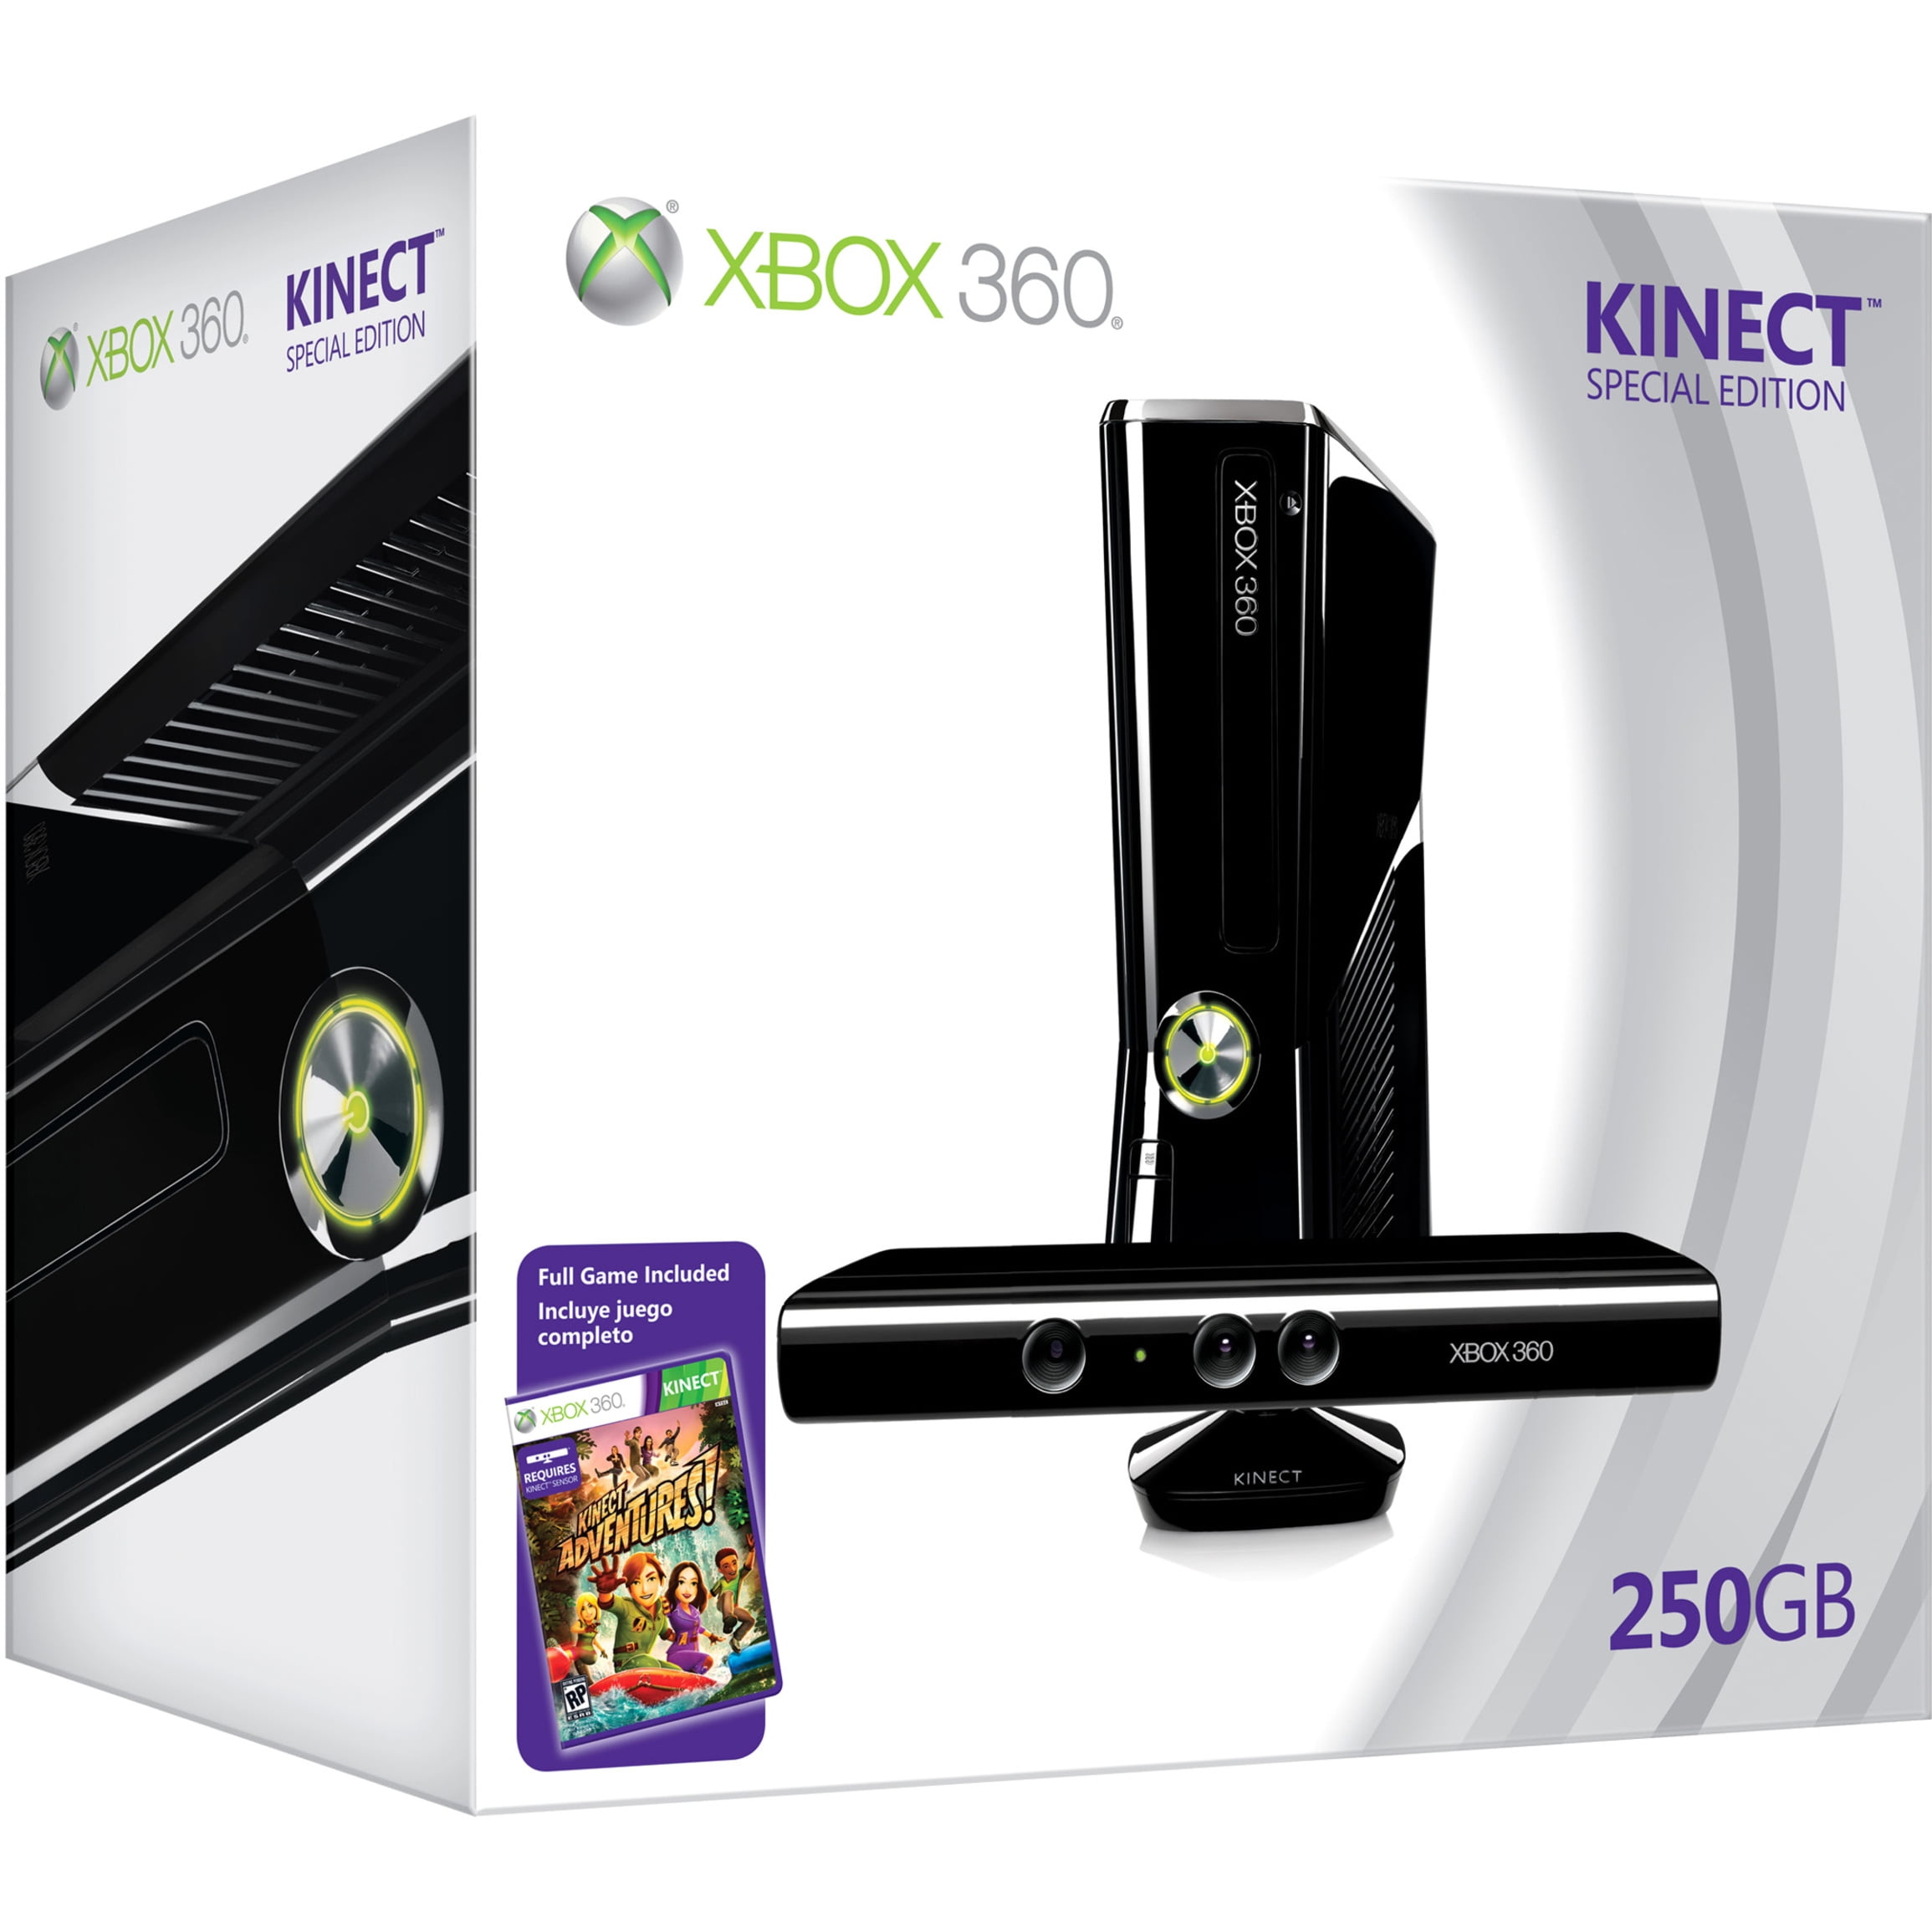 Microsoft XBOX ONE Limited Day One Launch Edition Bundle W/ Kinect Sensor  NEW